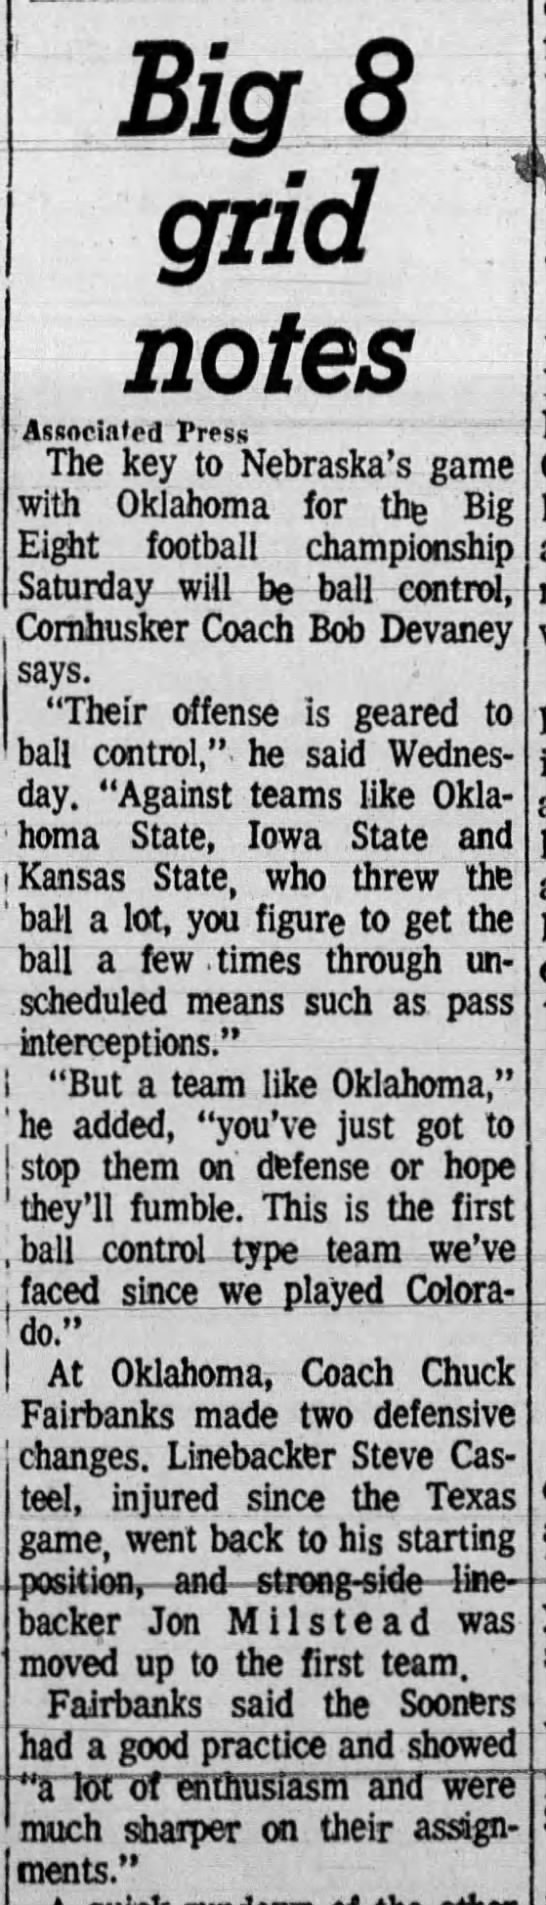 1970.11.18 Wednesday practices, Oklahoma and Nebraska - 